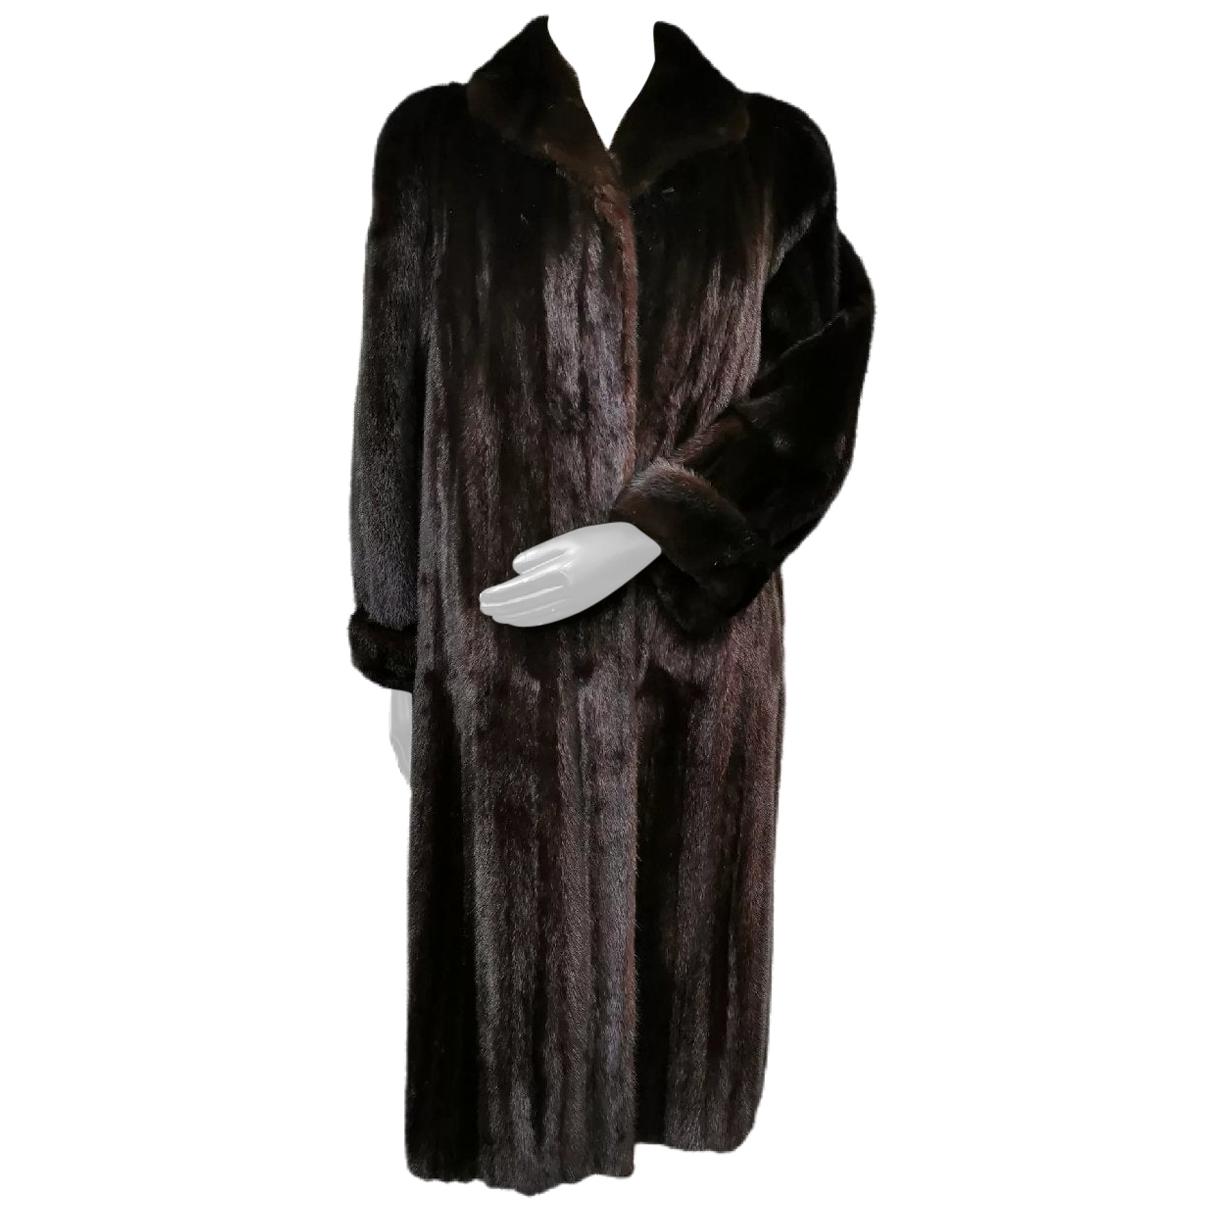 Birger christensen ranch mink fur coat size 8